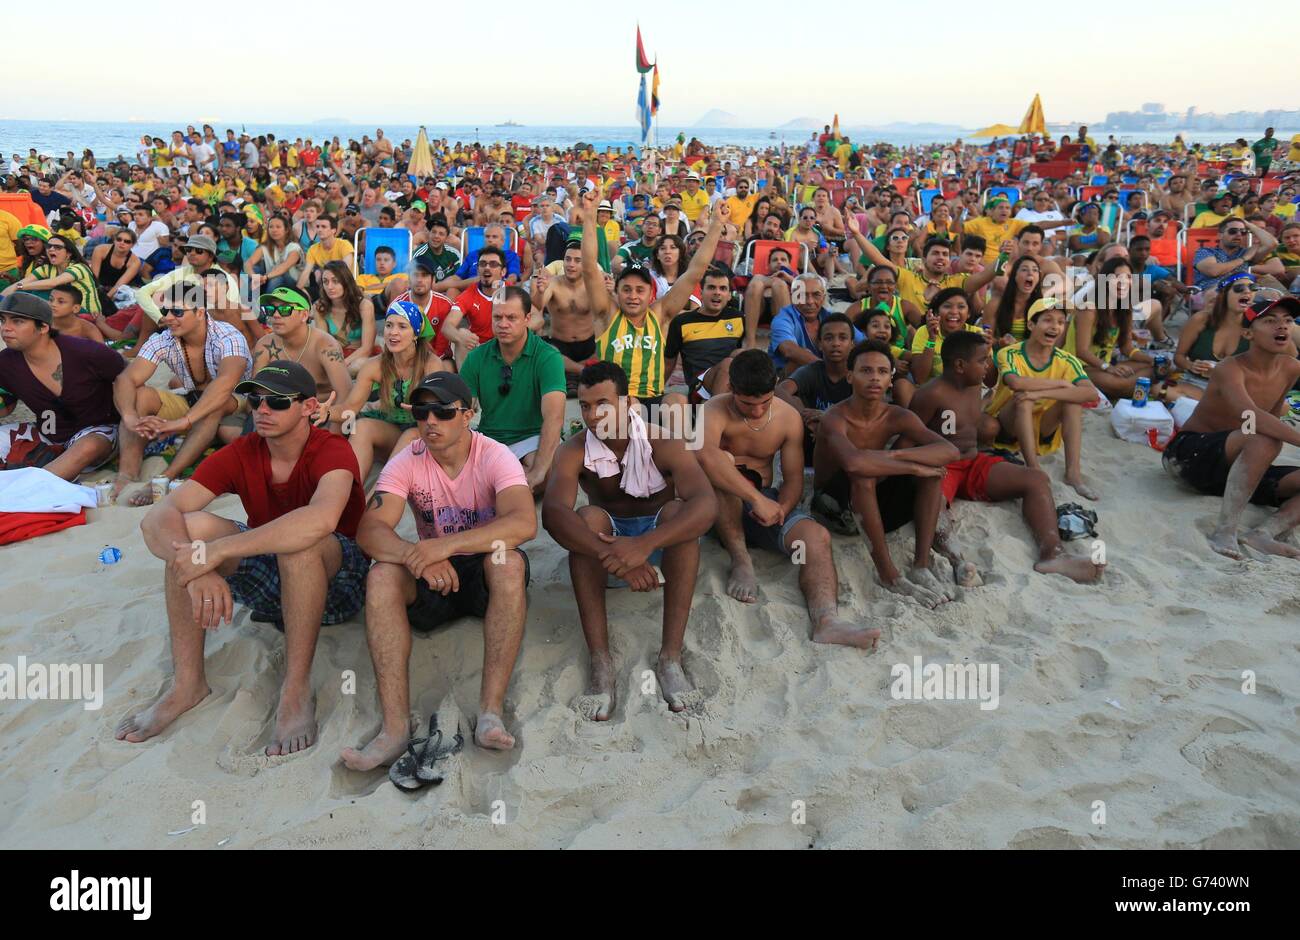 Soccer - FIFA World Cup 2014 - Fan Camp - Copacabana Beach. Brazil Fans watch the Brazil v Mexico match on a big screen on Copacabana Beach, Rio de Janeiro, Brazil. Stock Photo